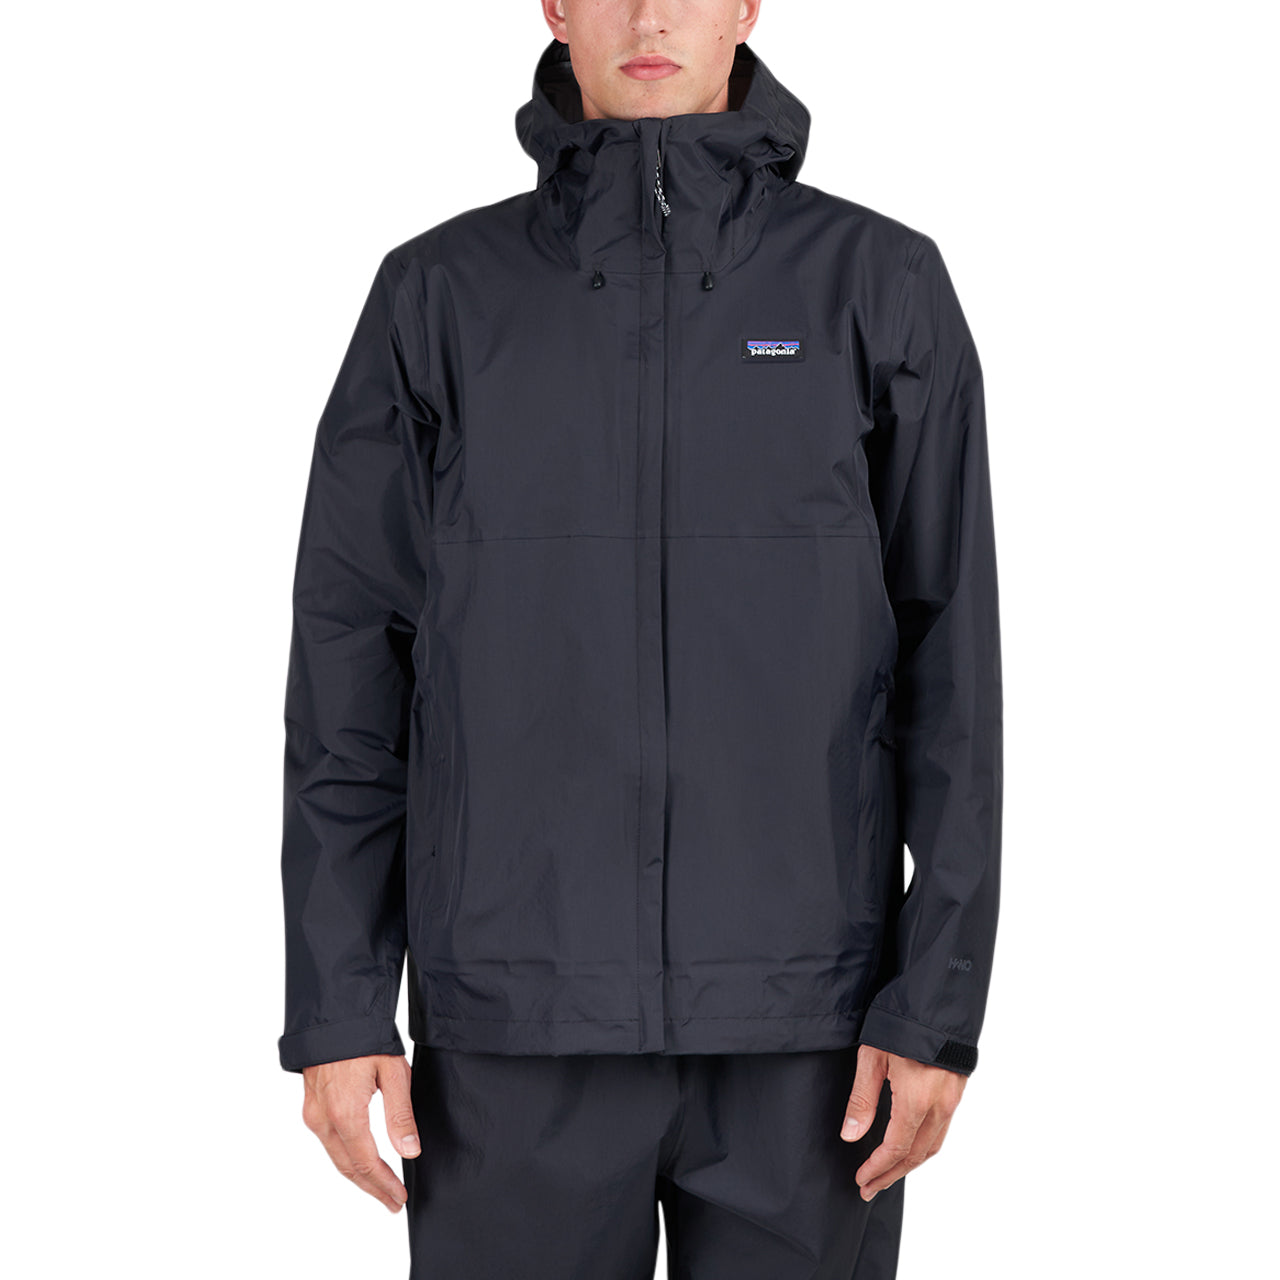 Patagonia Torrentshell 3L Rain Jacket (Black) 85241‐BLK - Allike Store